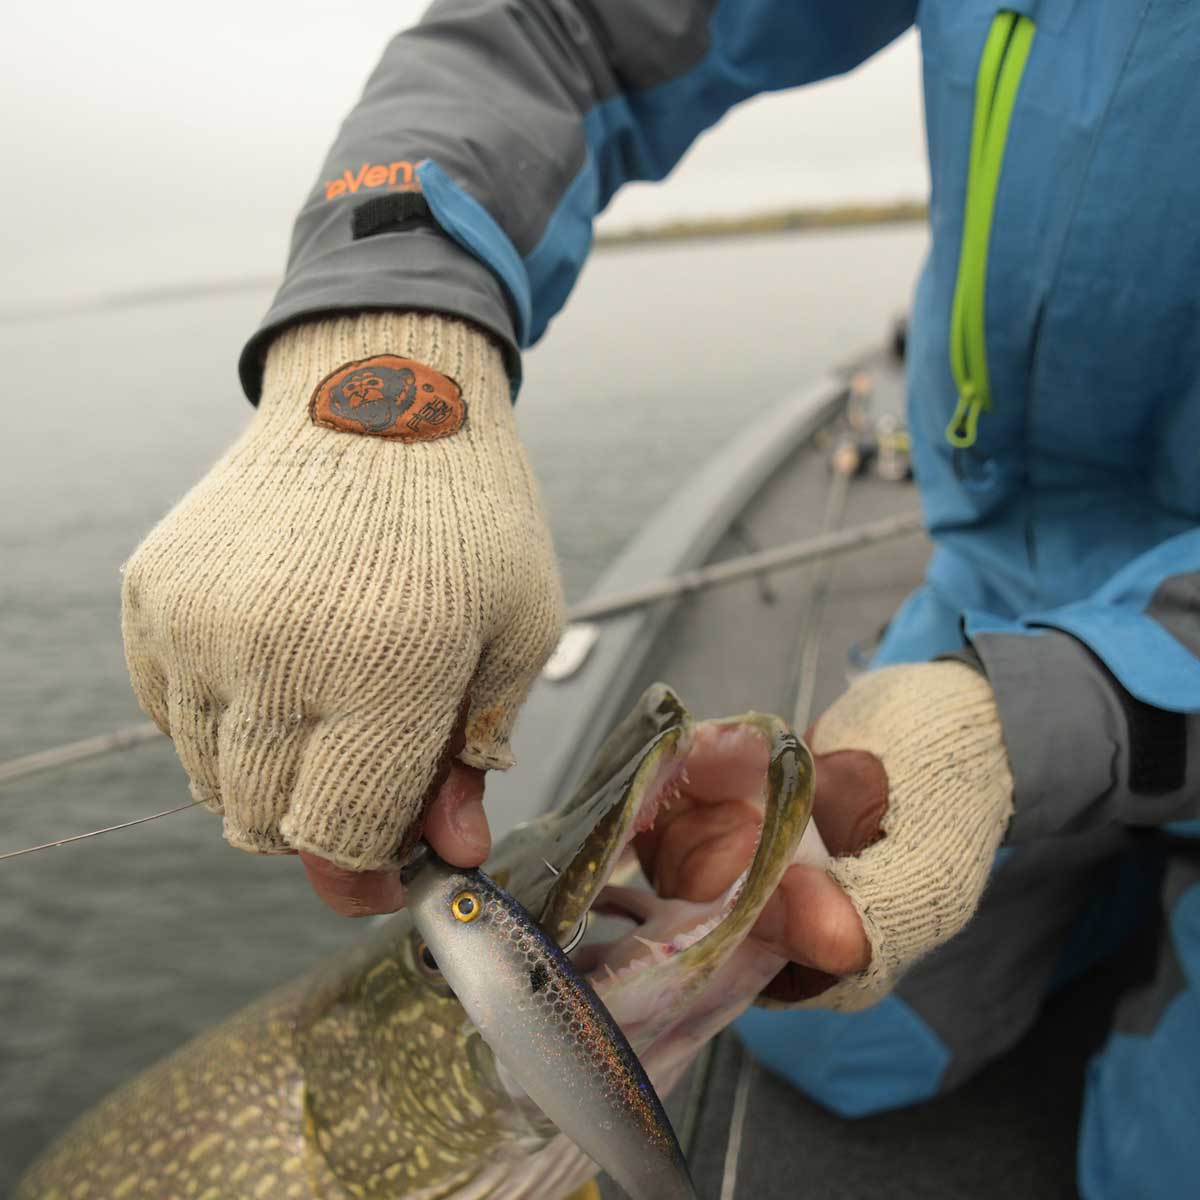 Fish Monkey Wooly Fishing Gloves | Fishing Apparel S/M